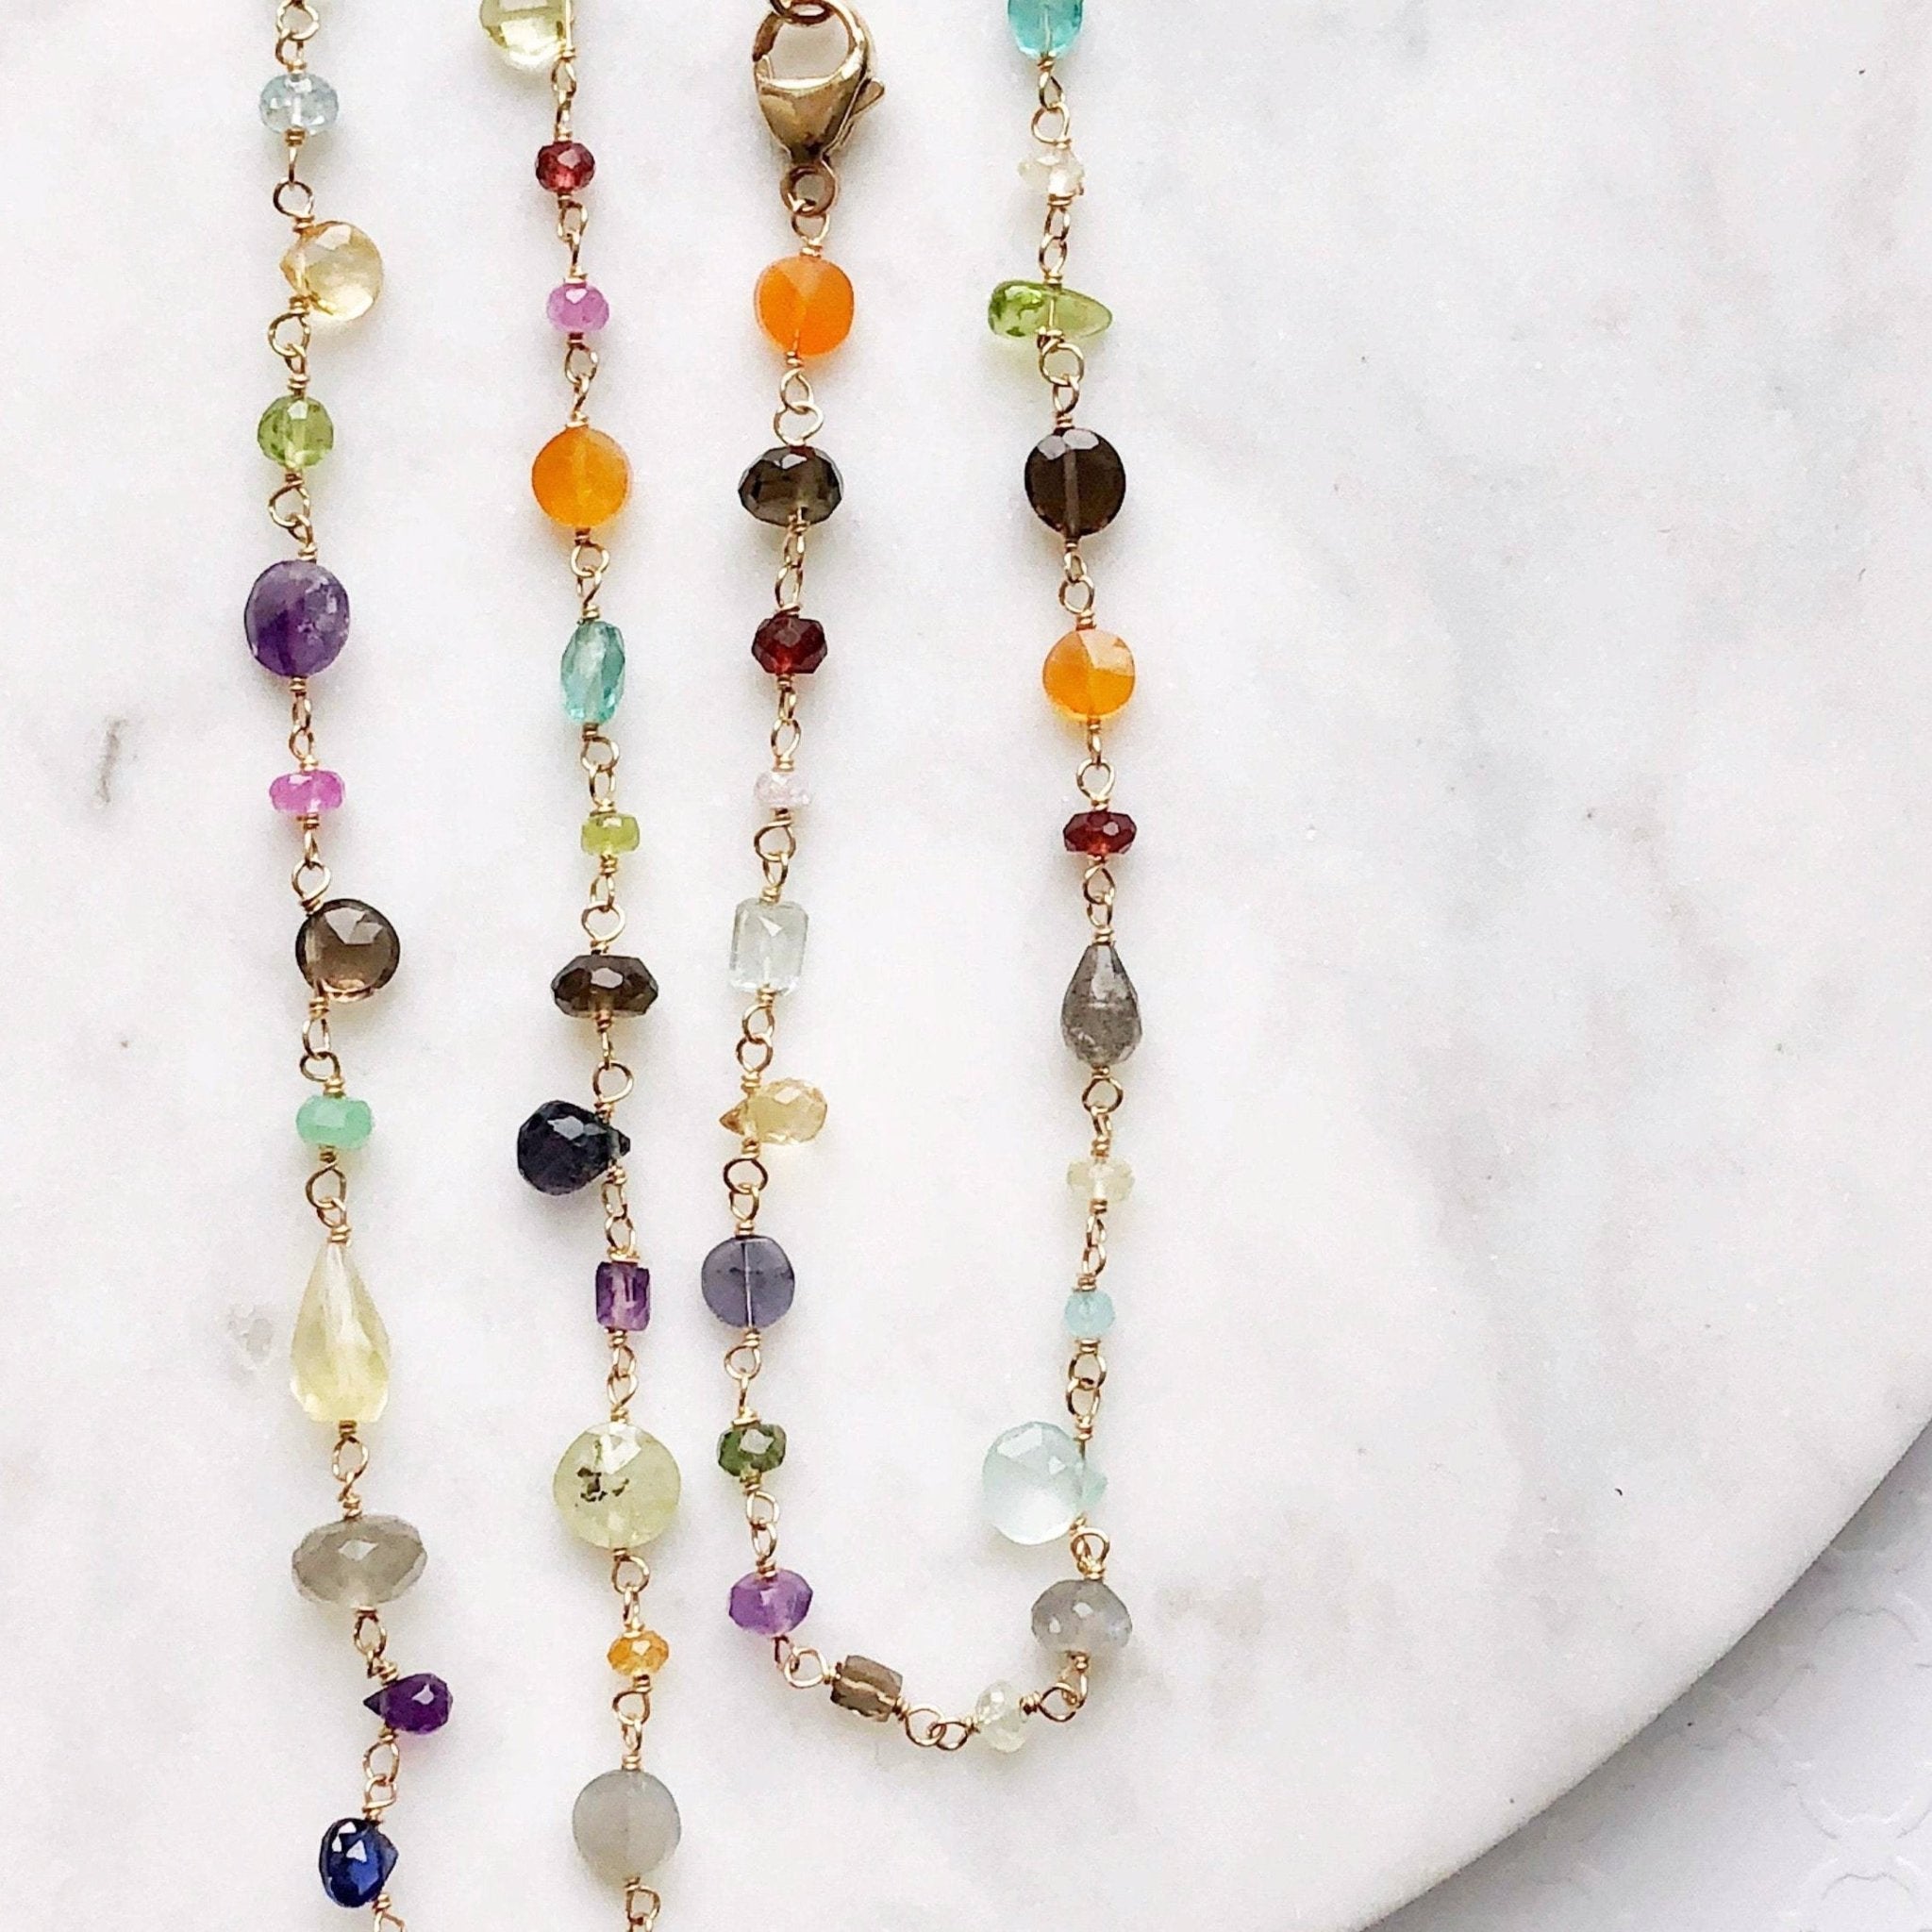 Unique Elegant Garnet Gemstone Statement Necklace Gift, Sarah Cornwell Sterling Silver / 16-18 Inches